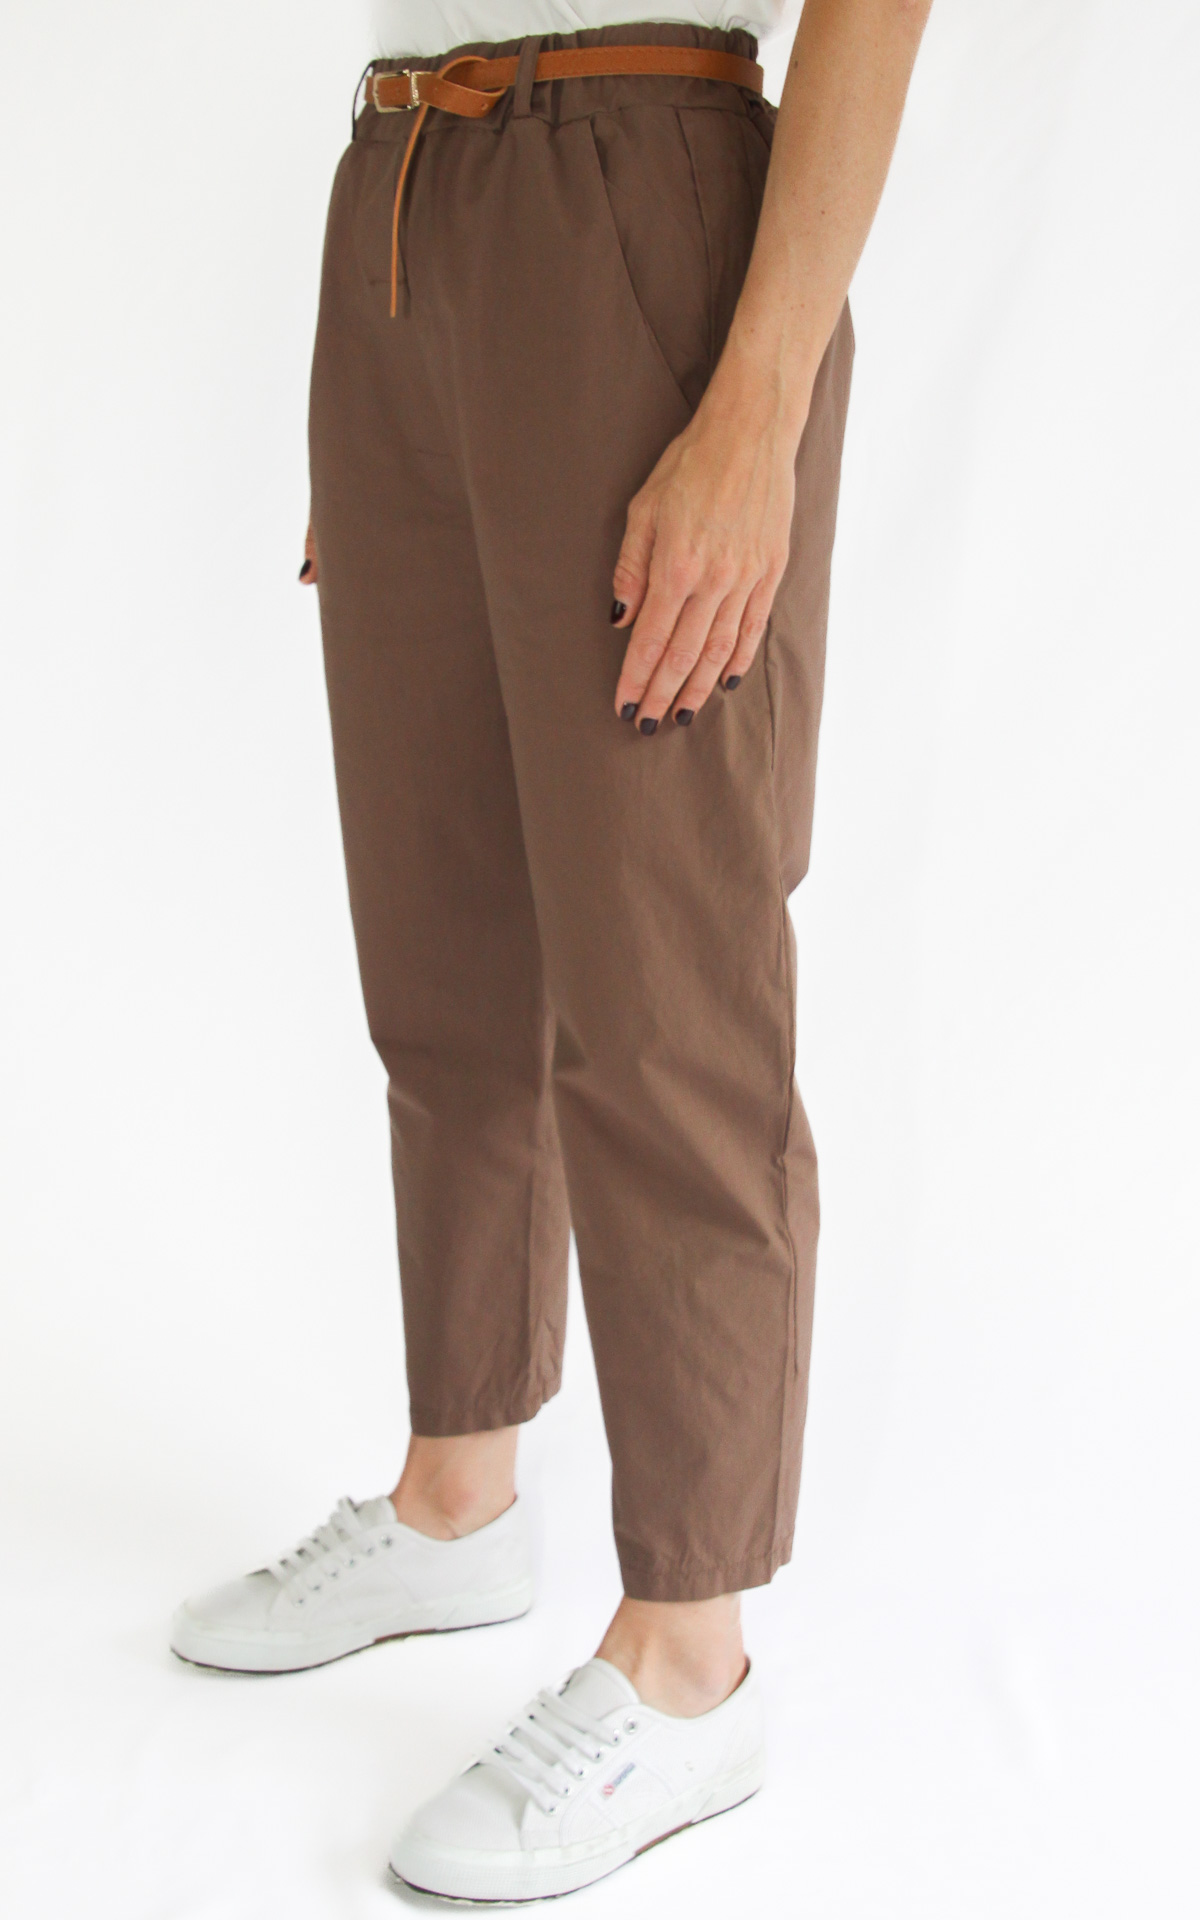 Initial - pantalone GILLY - marrone